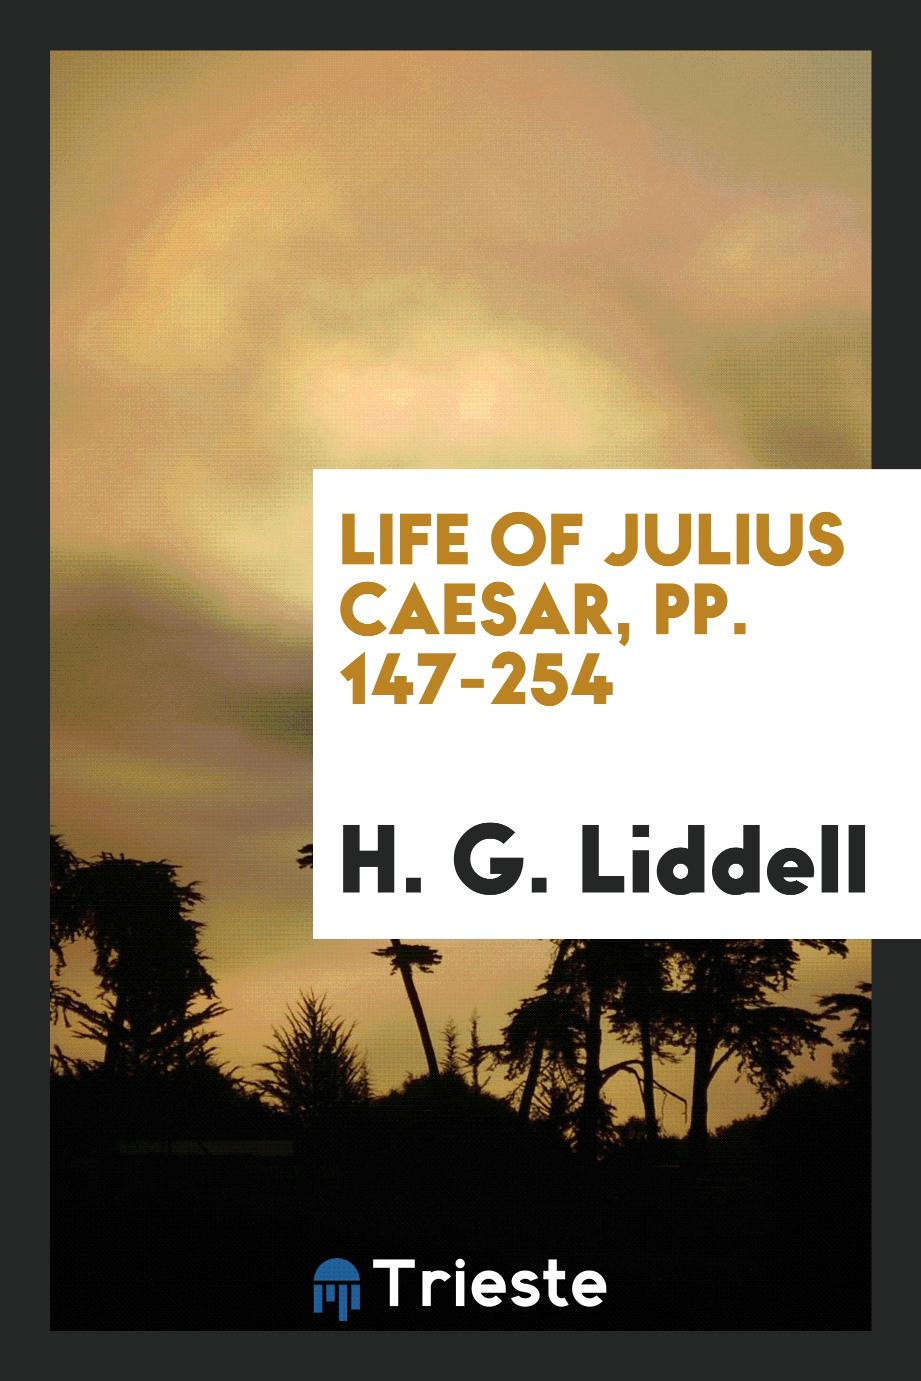 Life of Julius Caesar, pp. 147-254